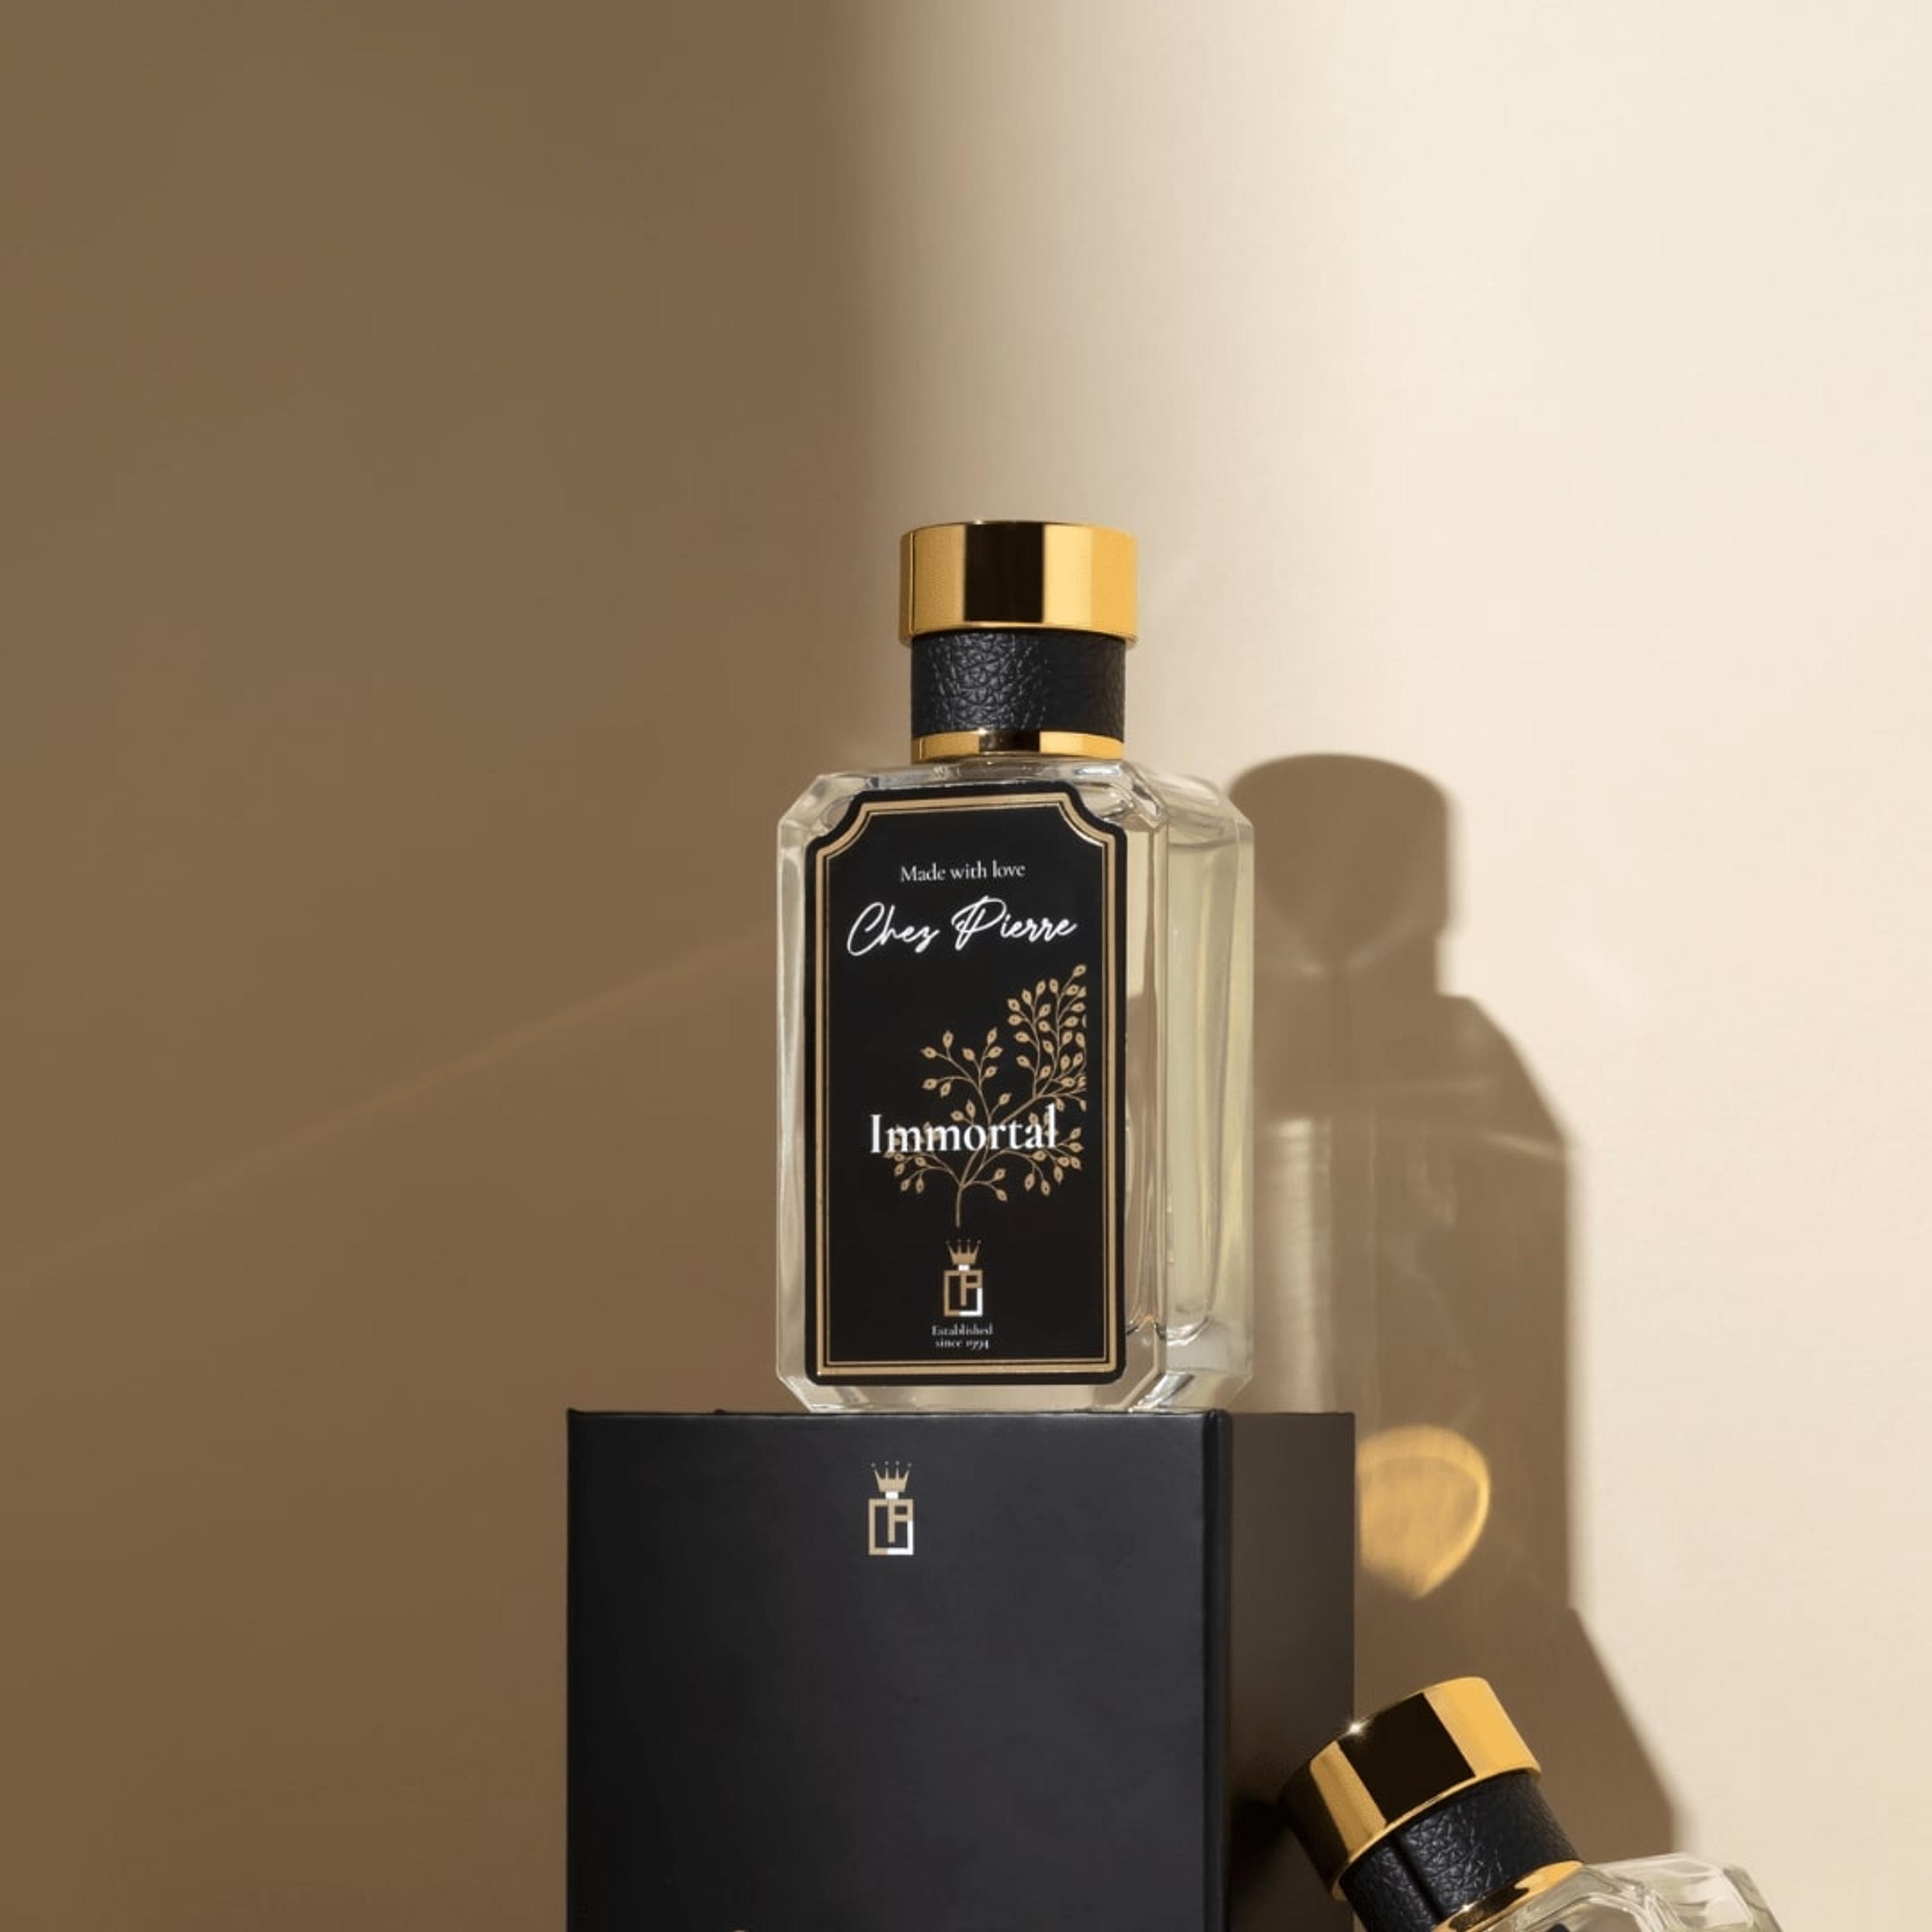 Chez Pierre's Immortal Perfume Inspired By Invictus